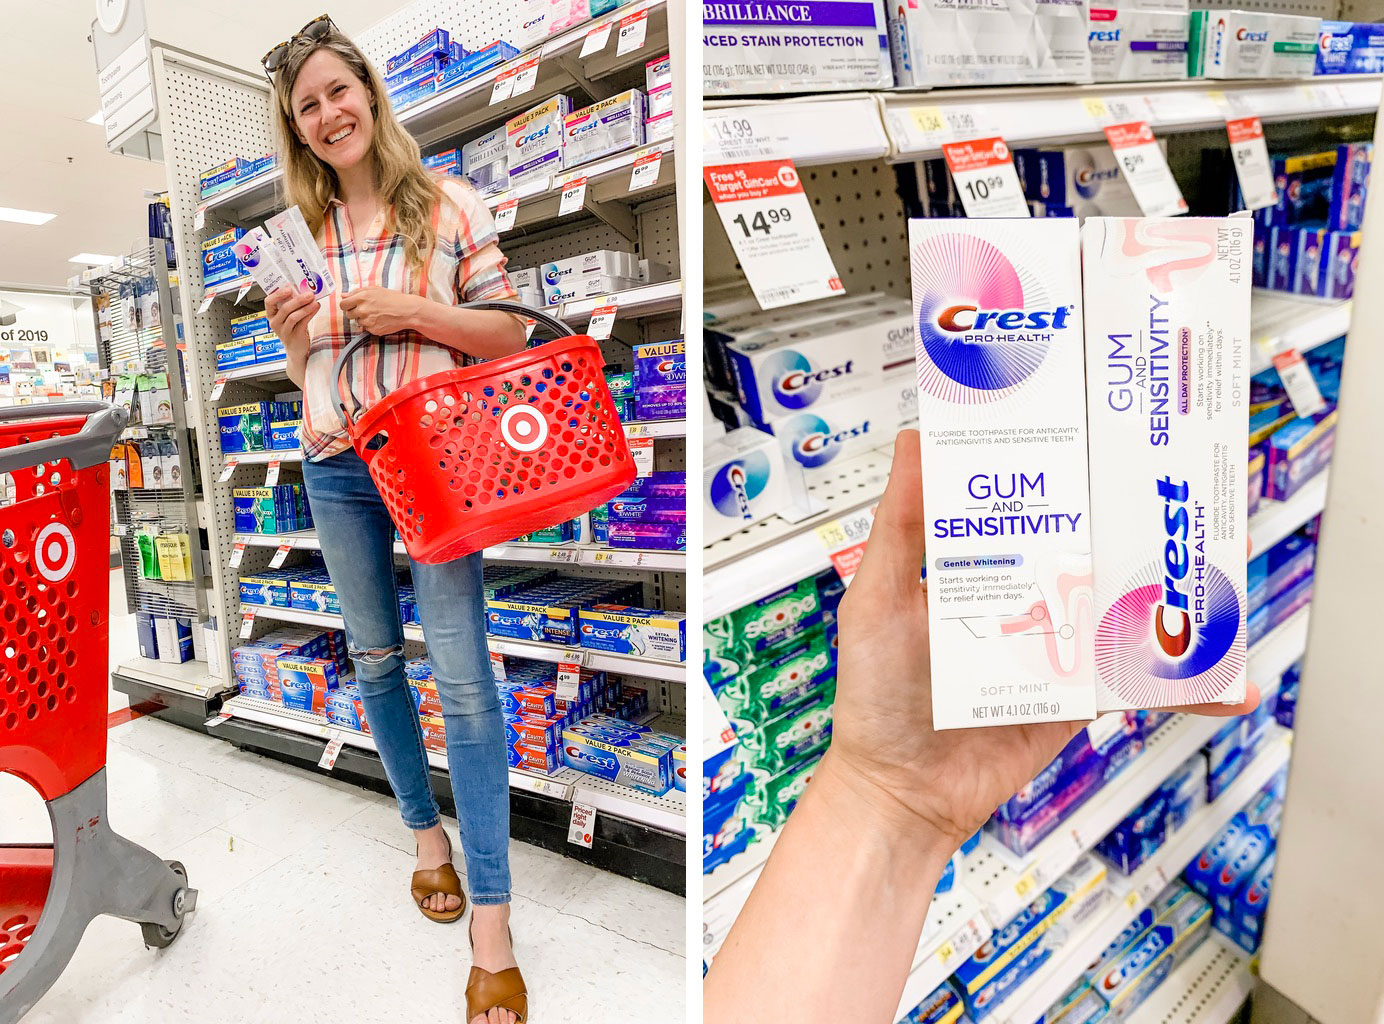 #ad Save $2 on new Crest Gum Sensitivity at Target